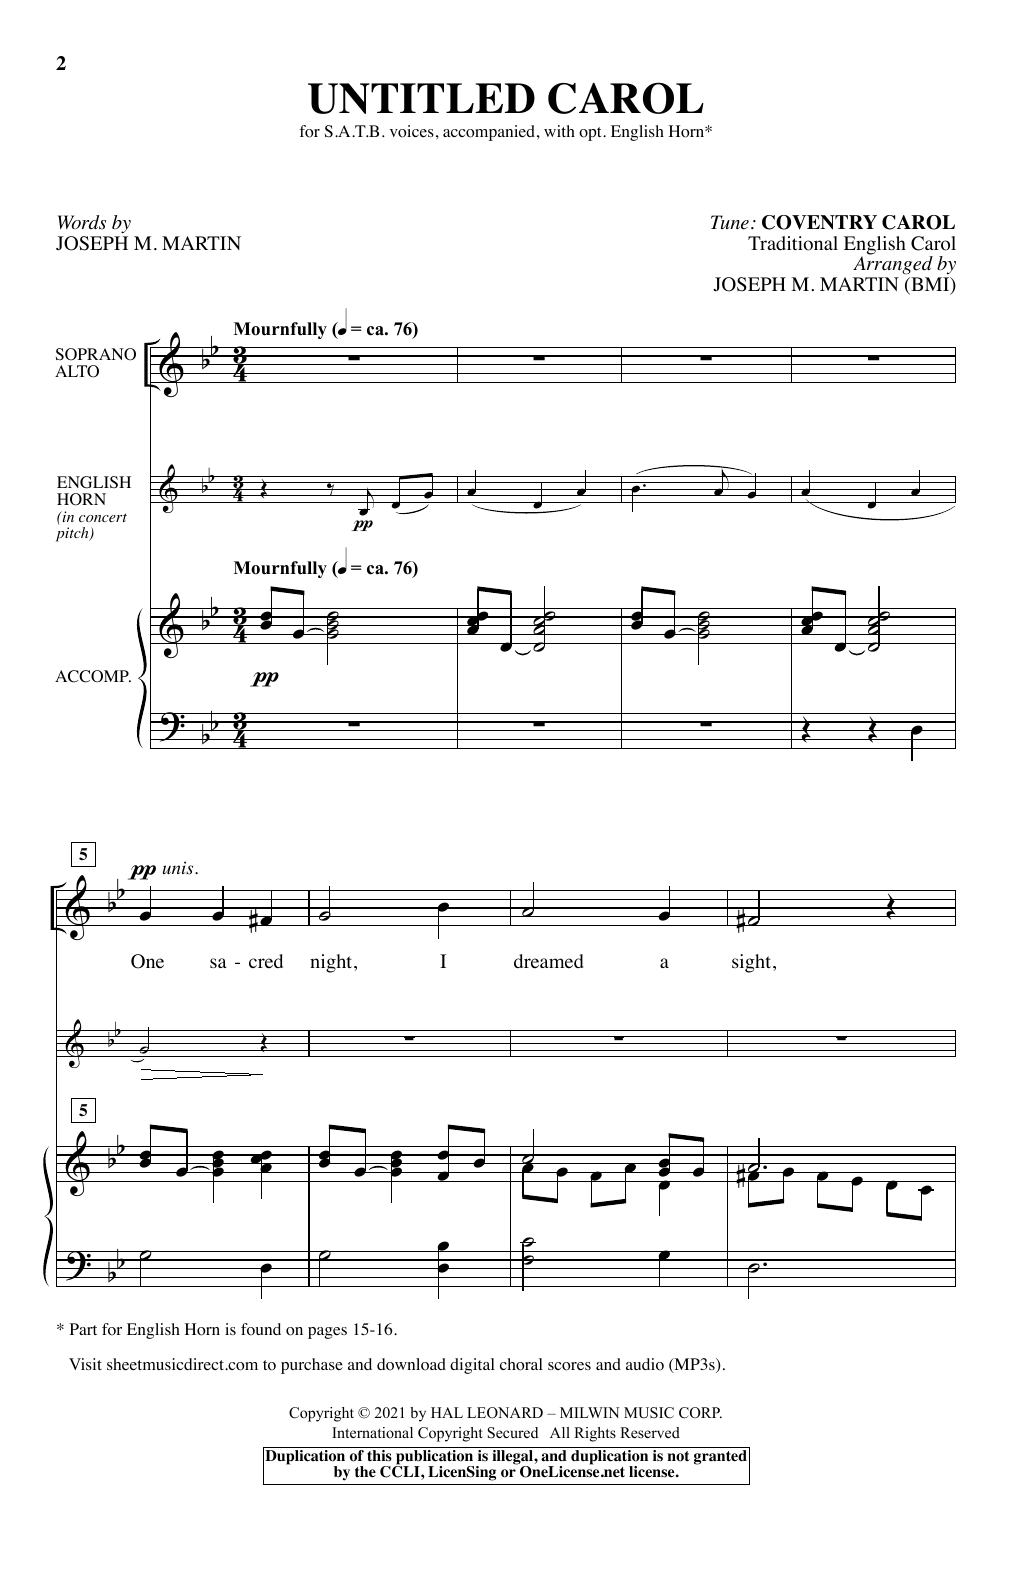 Joseph M. Martin Untitled Carol Sheet Music Notes & Chords for SATB Choir - Download or Print PDF